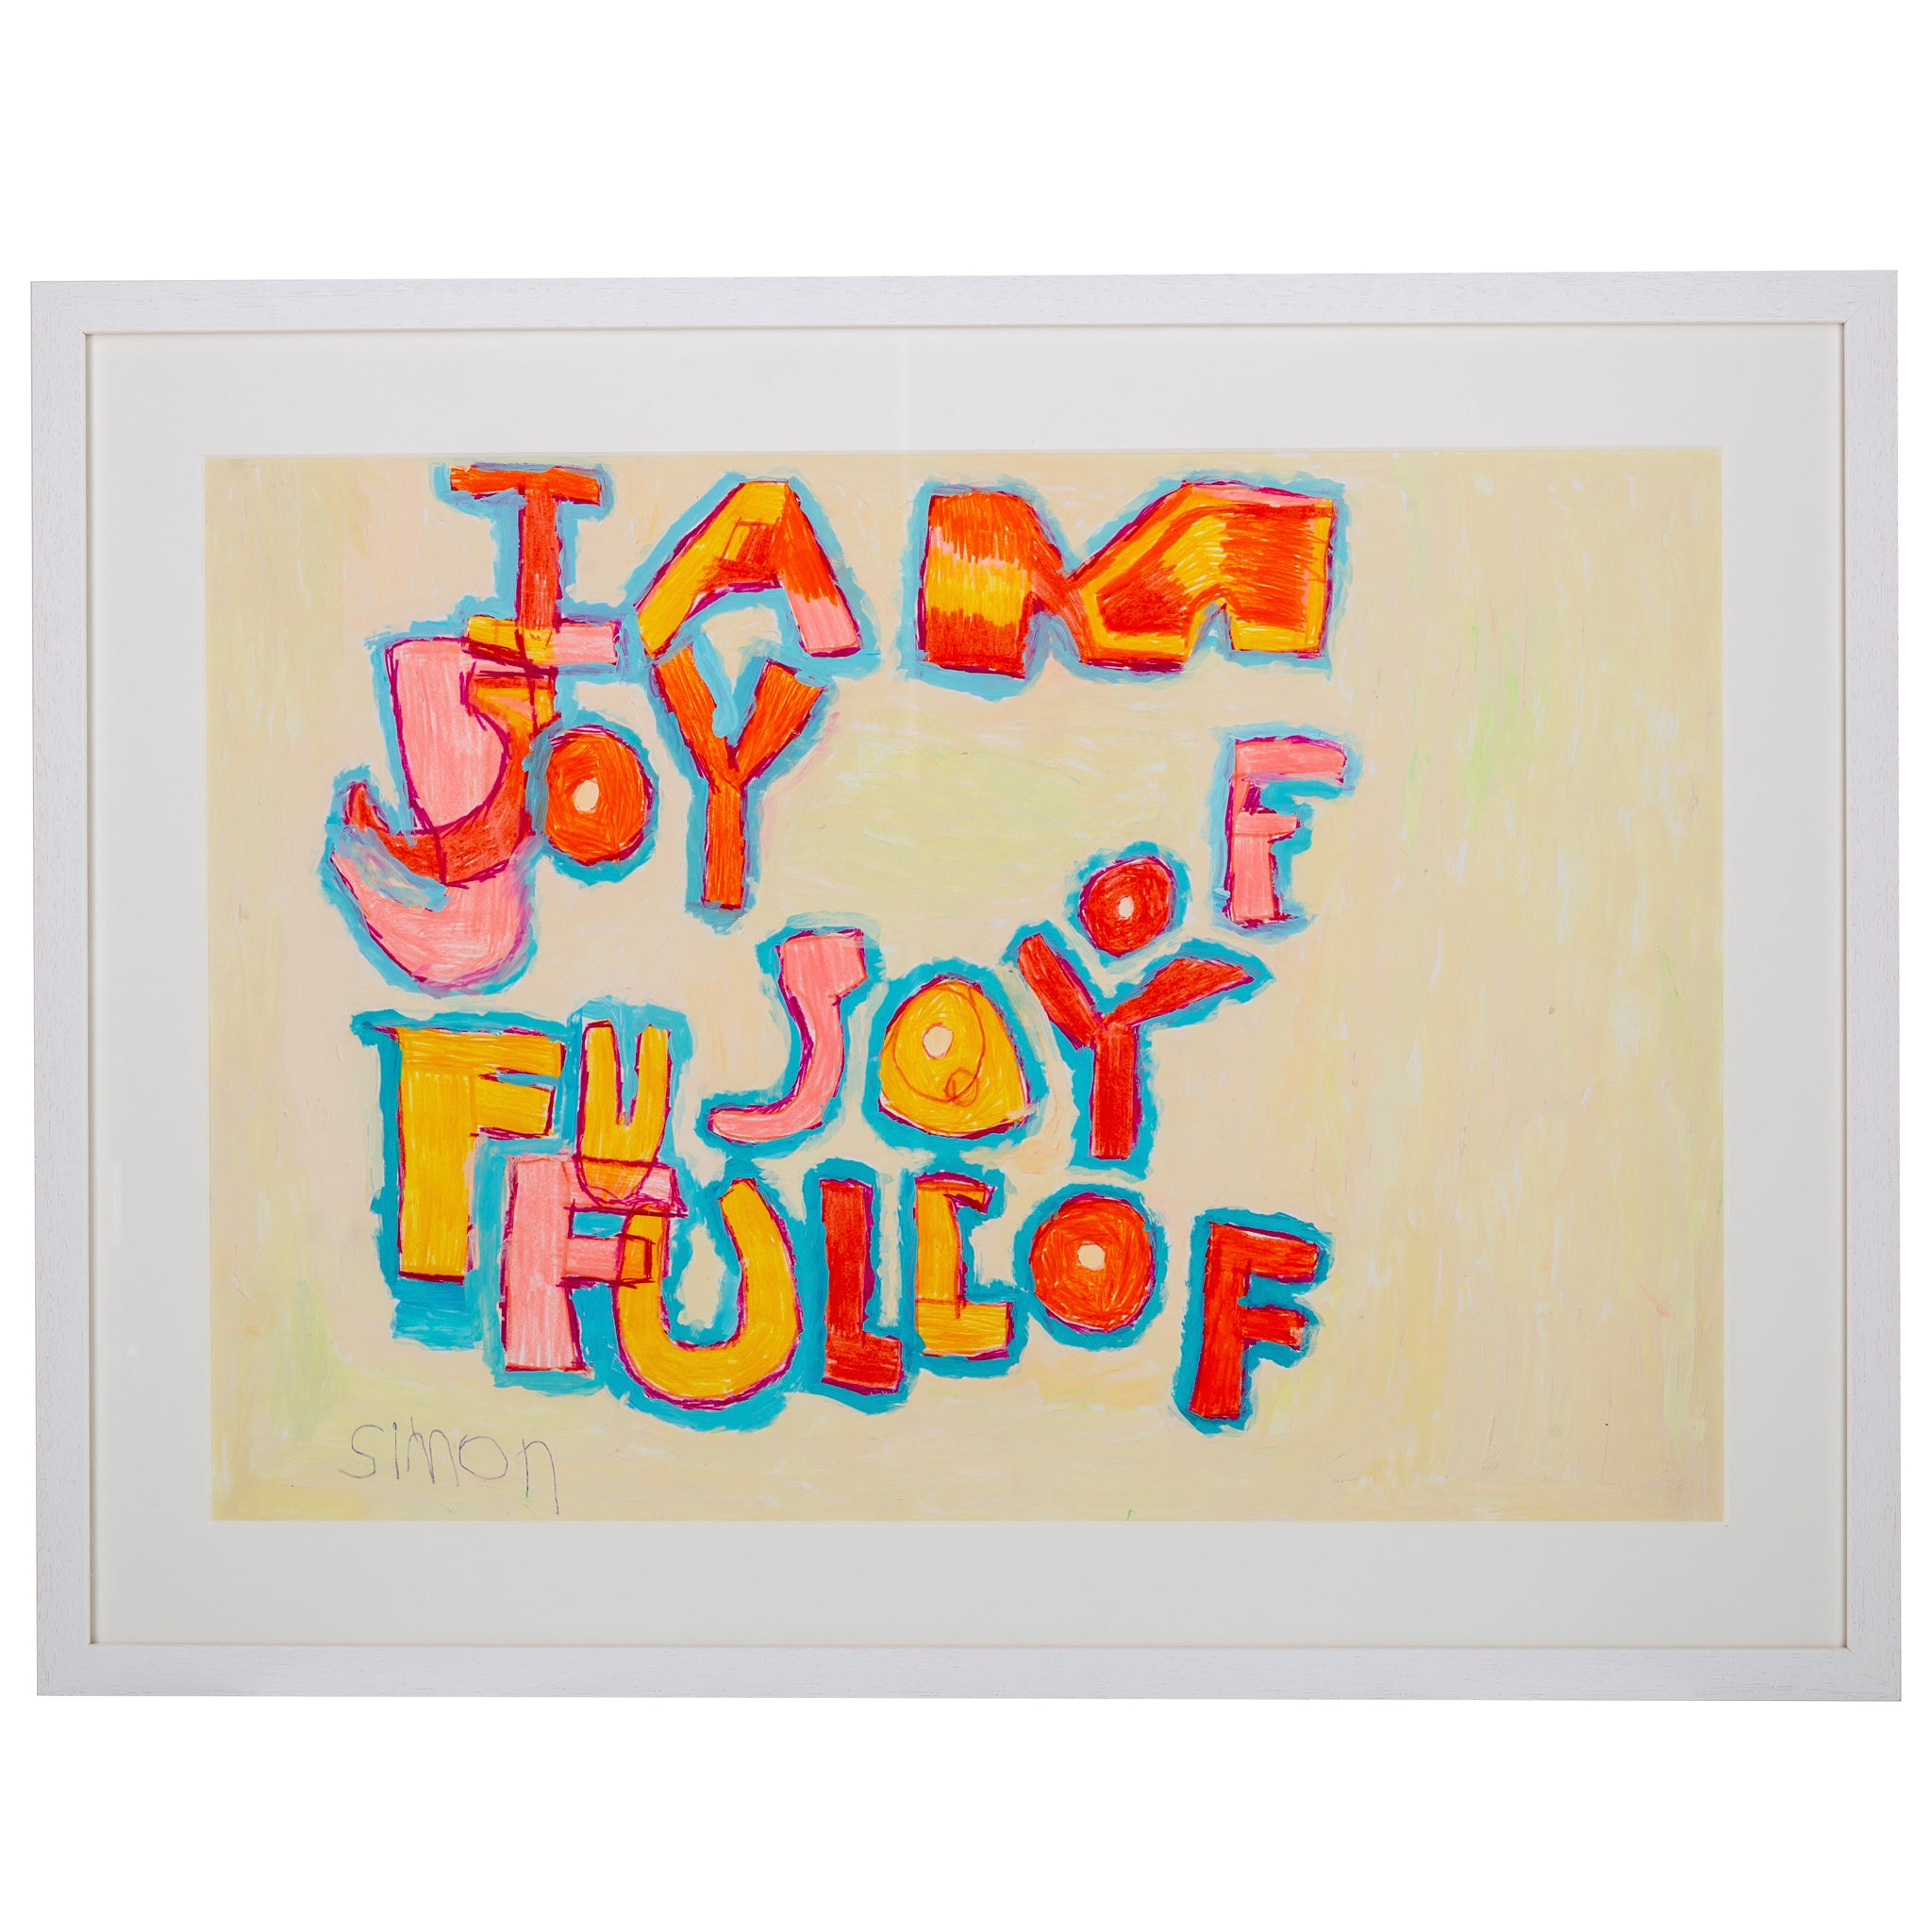 Framed painting of the words 'I am full of joy"